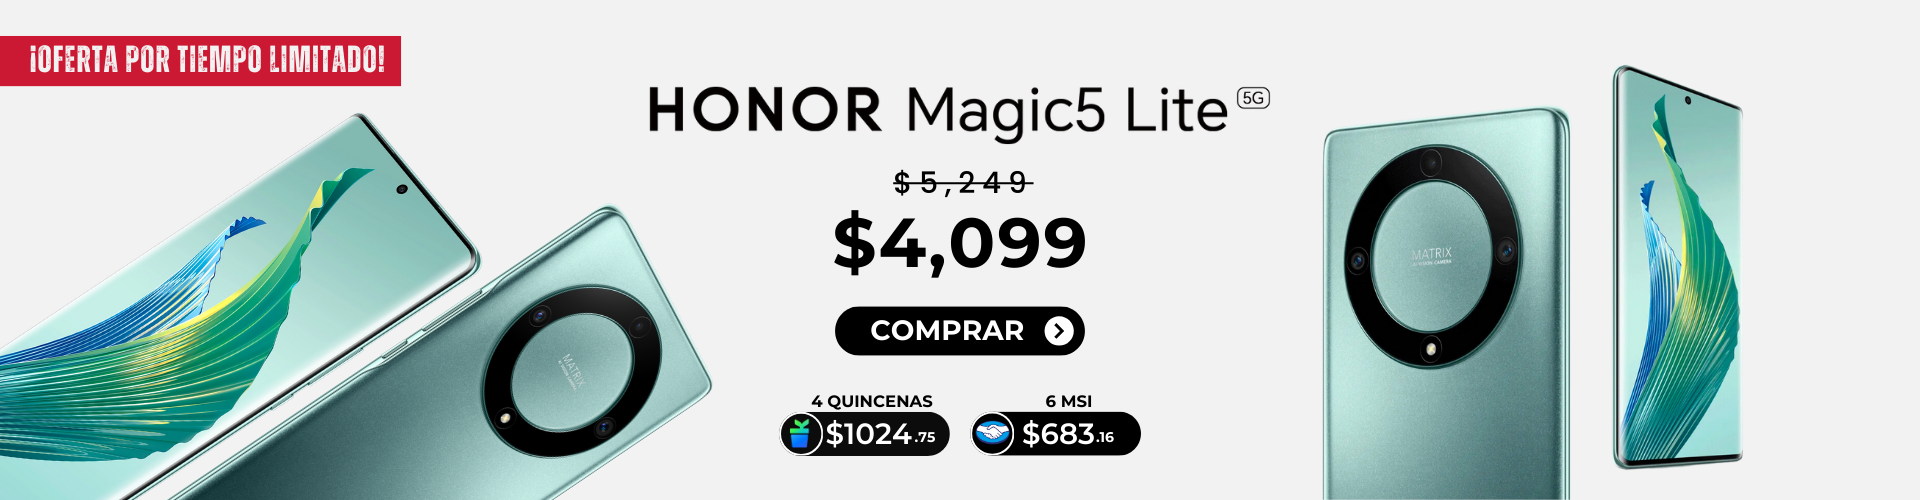 Honor Magic5 Lite 8GB RAM